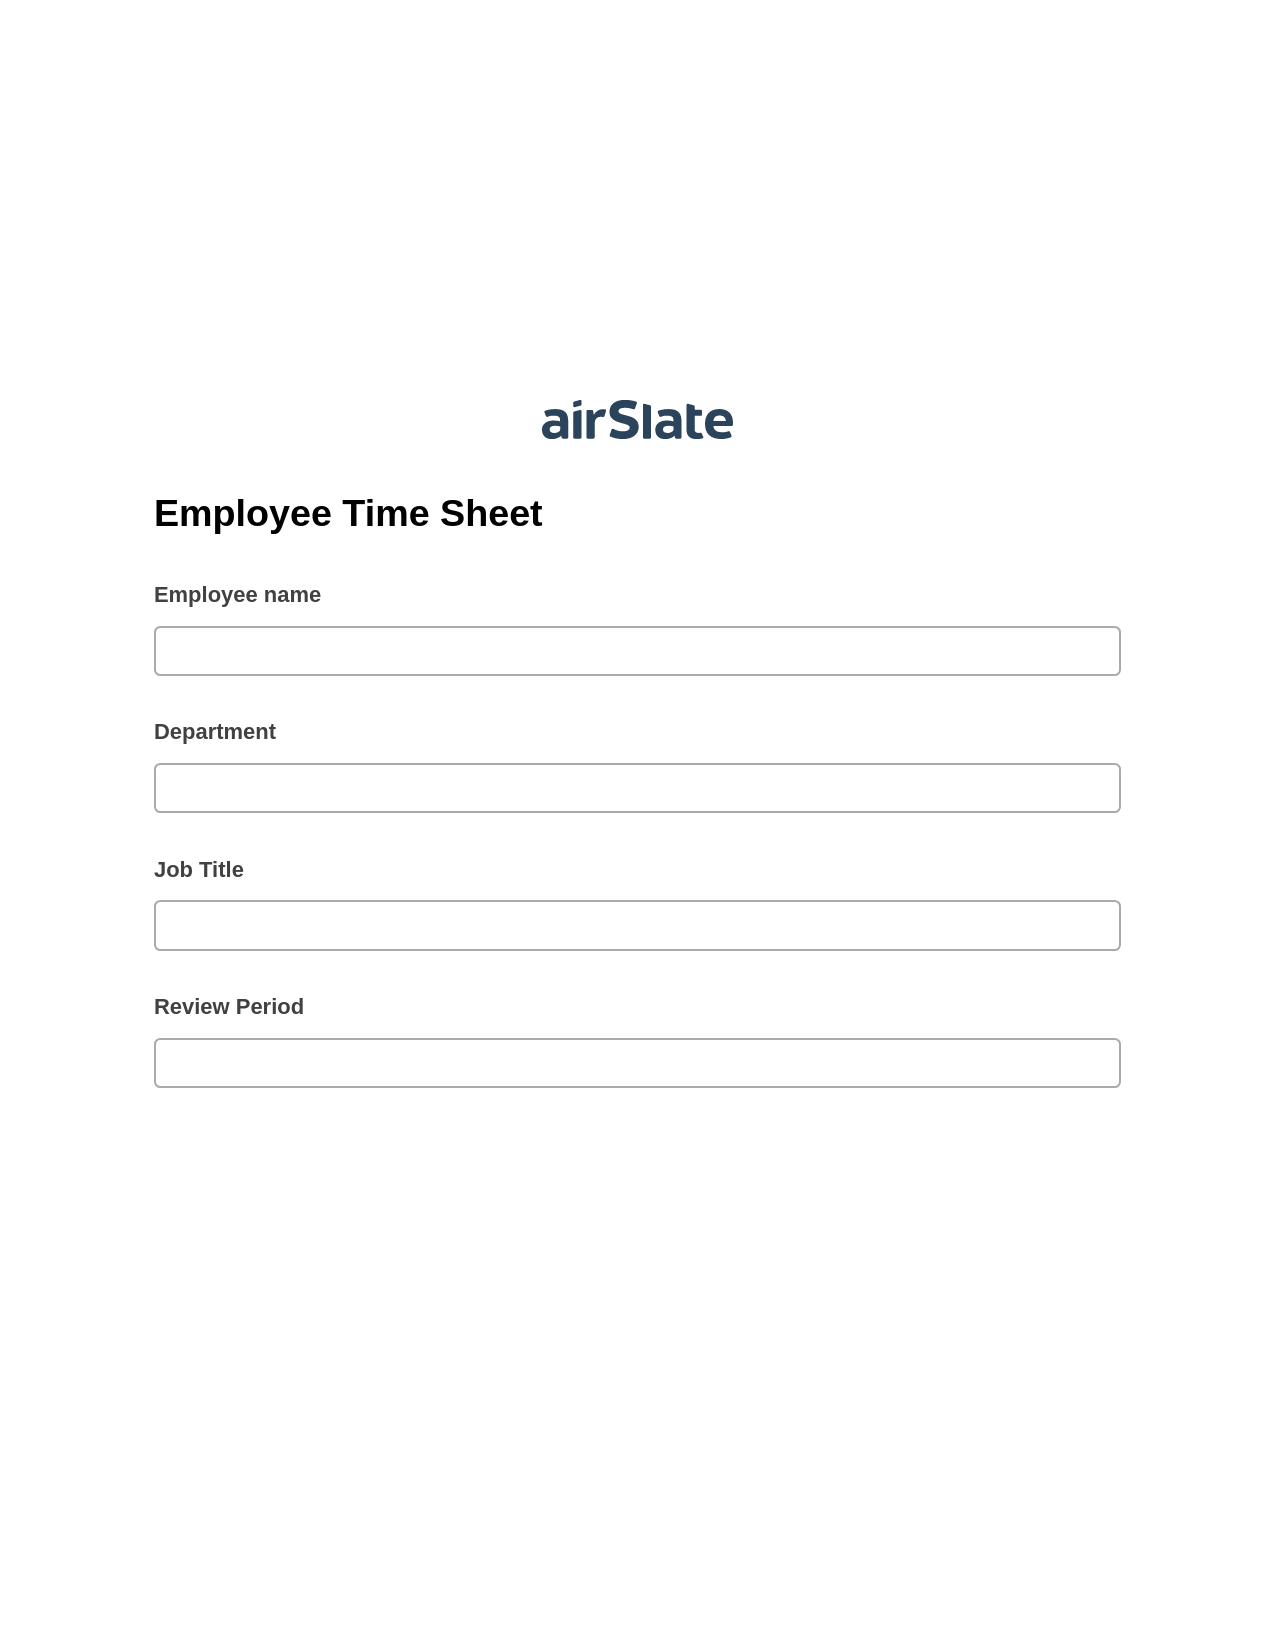 Employee Time Sheet Pre-fill from CSV File Bot, Add Tags to Slate Bot, Slack Notification Postfinish Bot